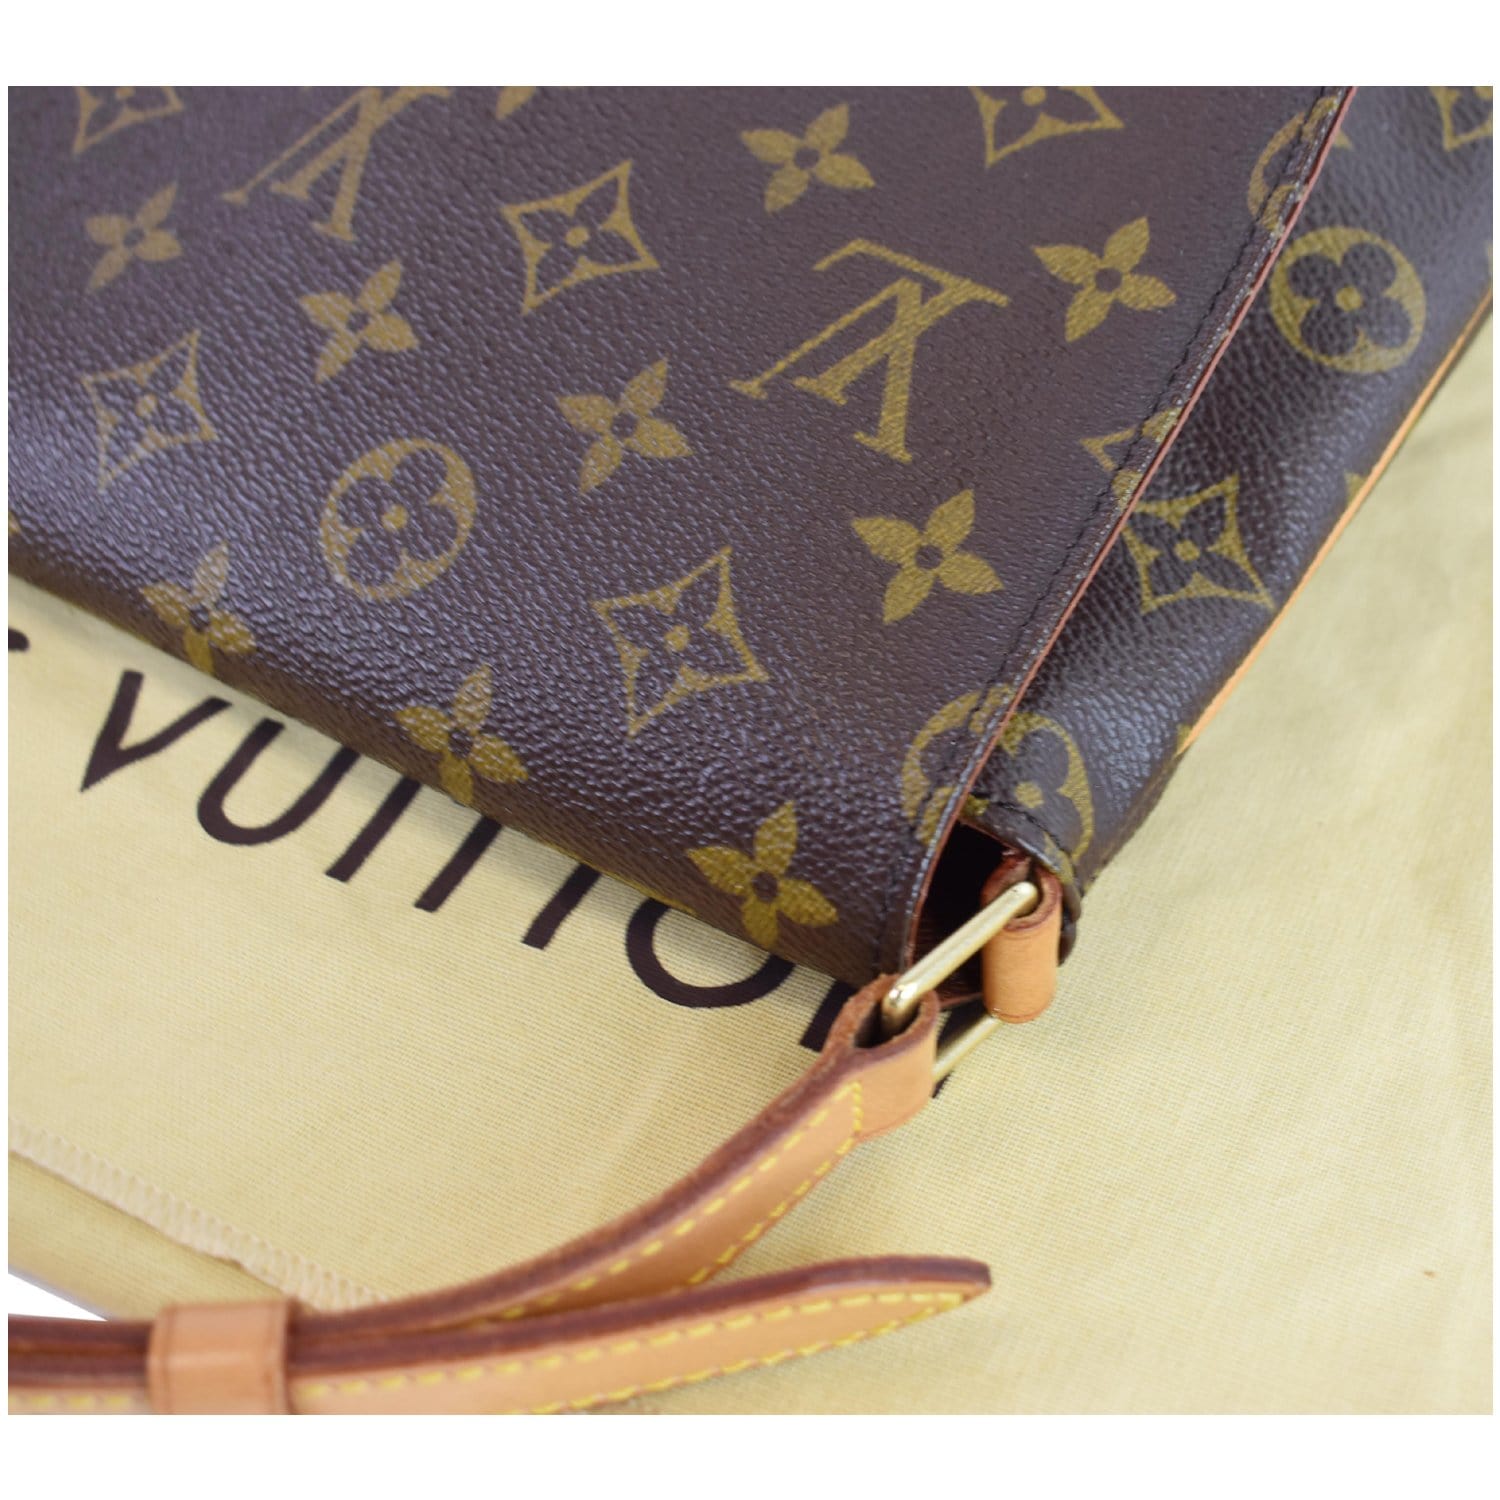 Shop Louis Vuitton MONOGRAM Toiletry pouch 26 (M47542) by